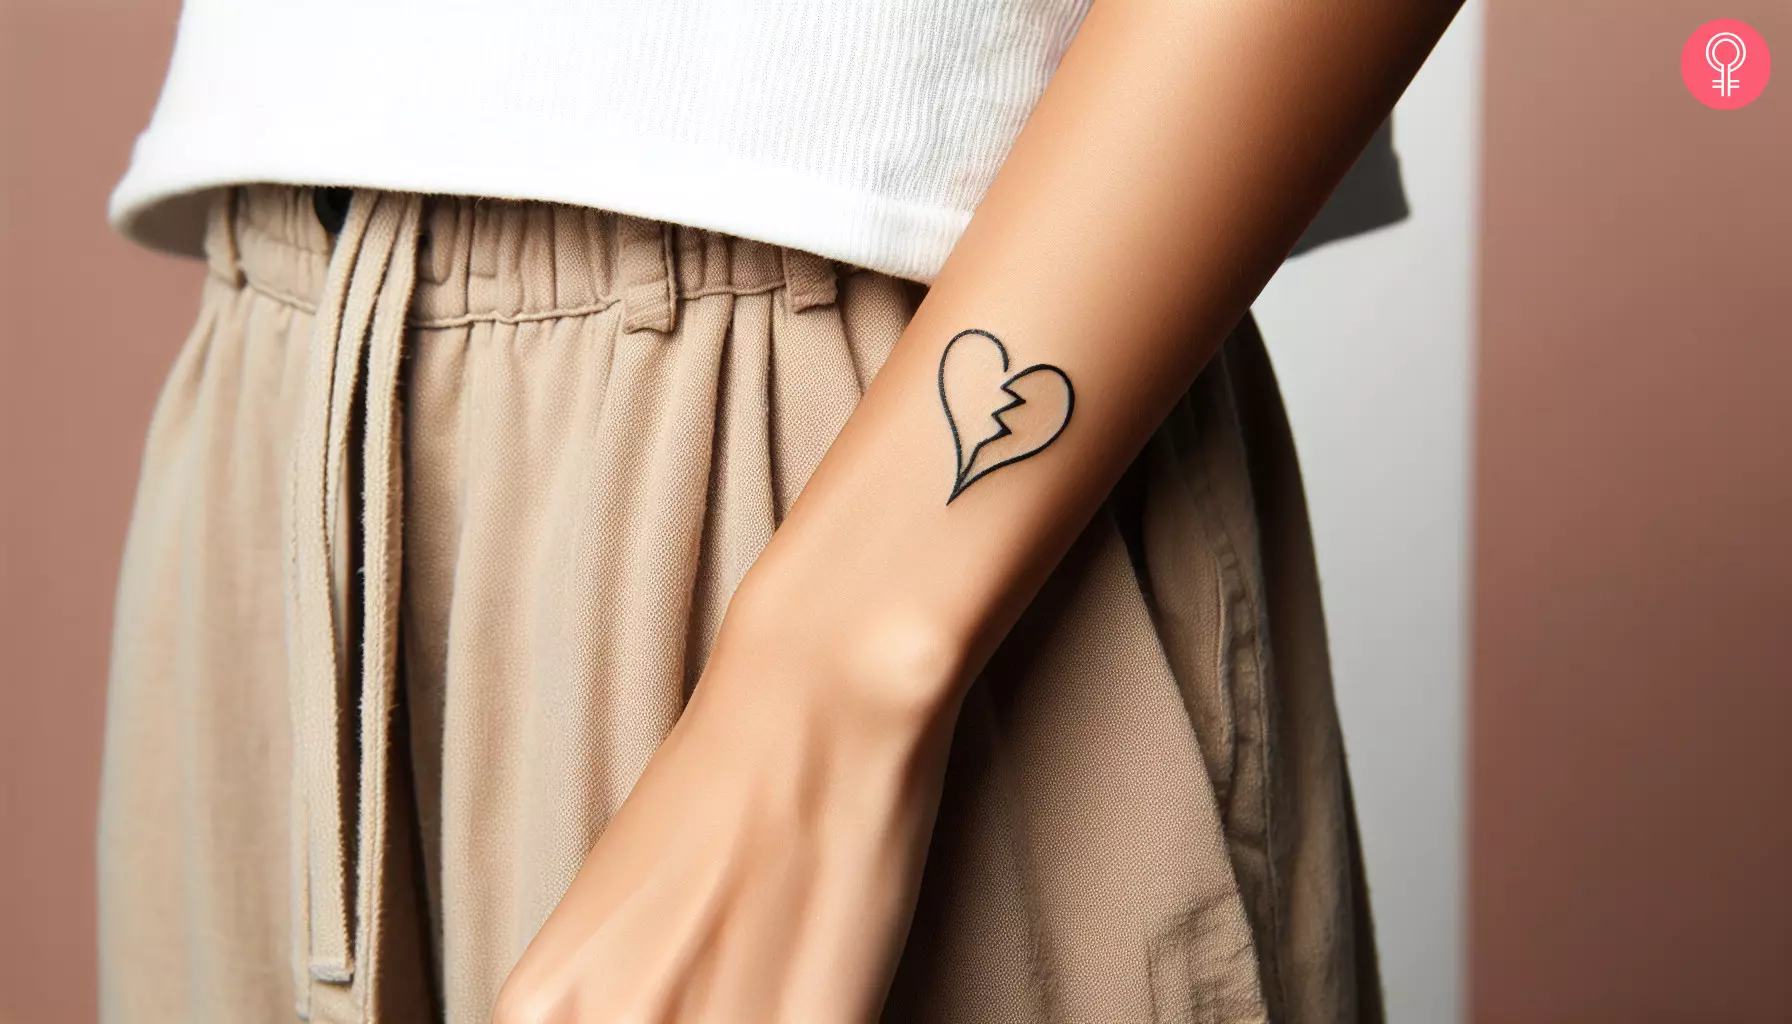 A broken heart fine line tattoo on the forearm